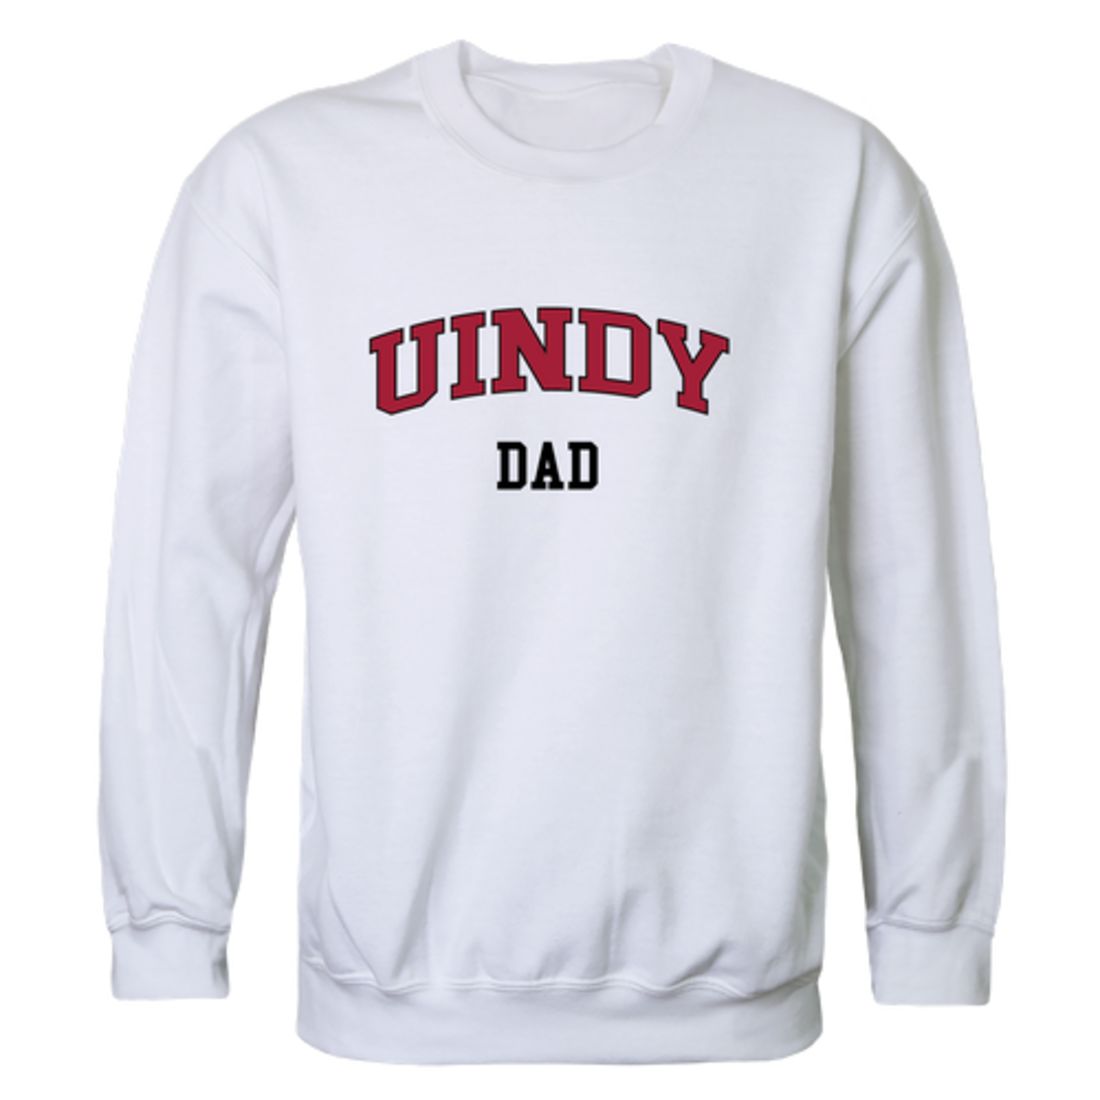 UIndy University of Indianapolis Greyhounds Dad Fleece Crewneck Pullover Sweatshirt Heather Charcoal-Campus-Wardrobe